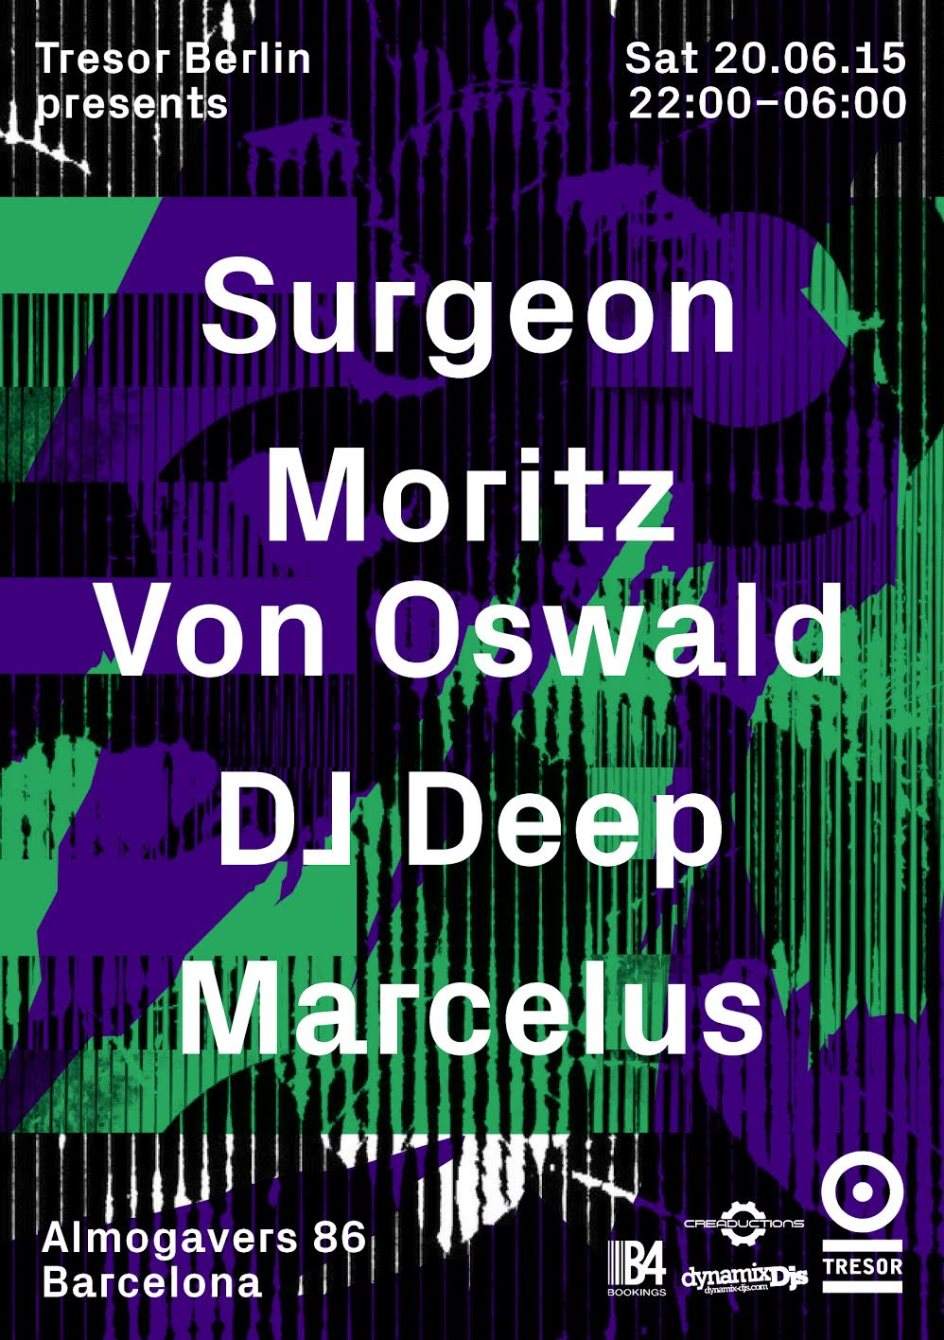 Tresor Berlin with Surgeon, Moritz Von Oswald, DJ Deep, Marcelus - Flyer back